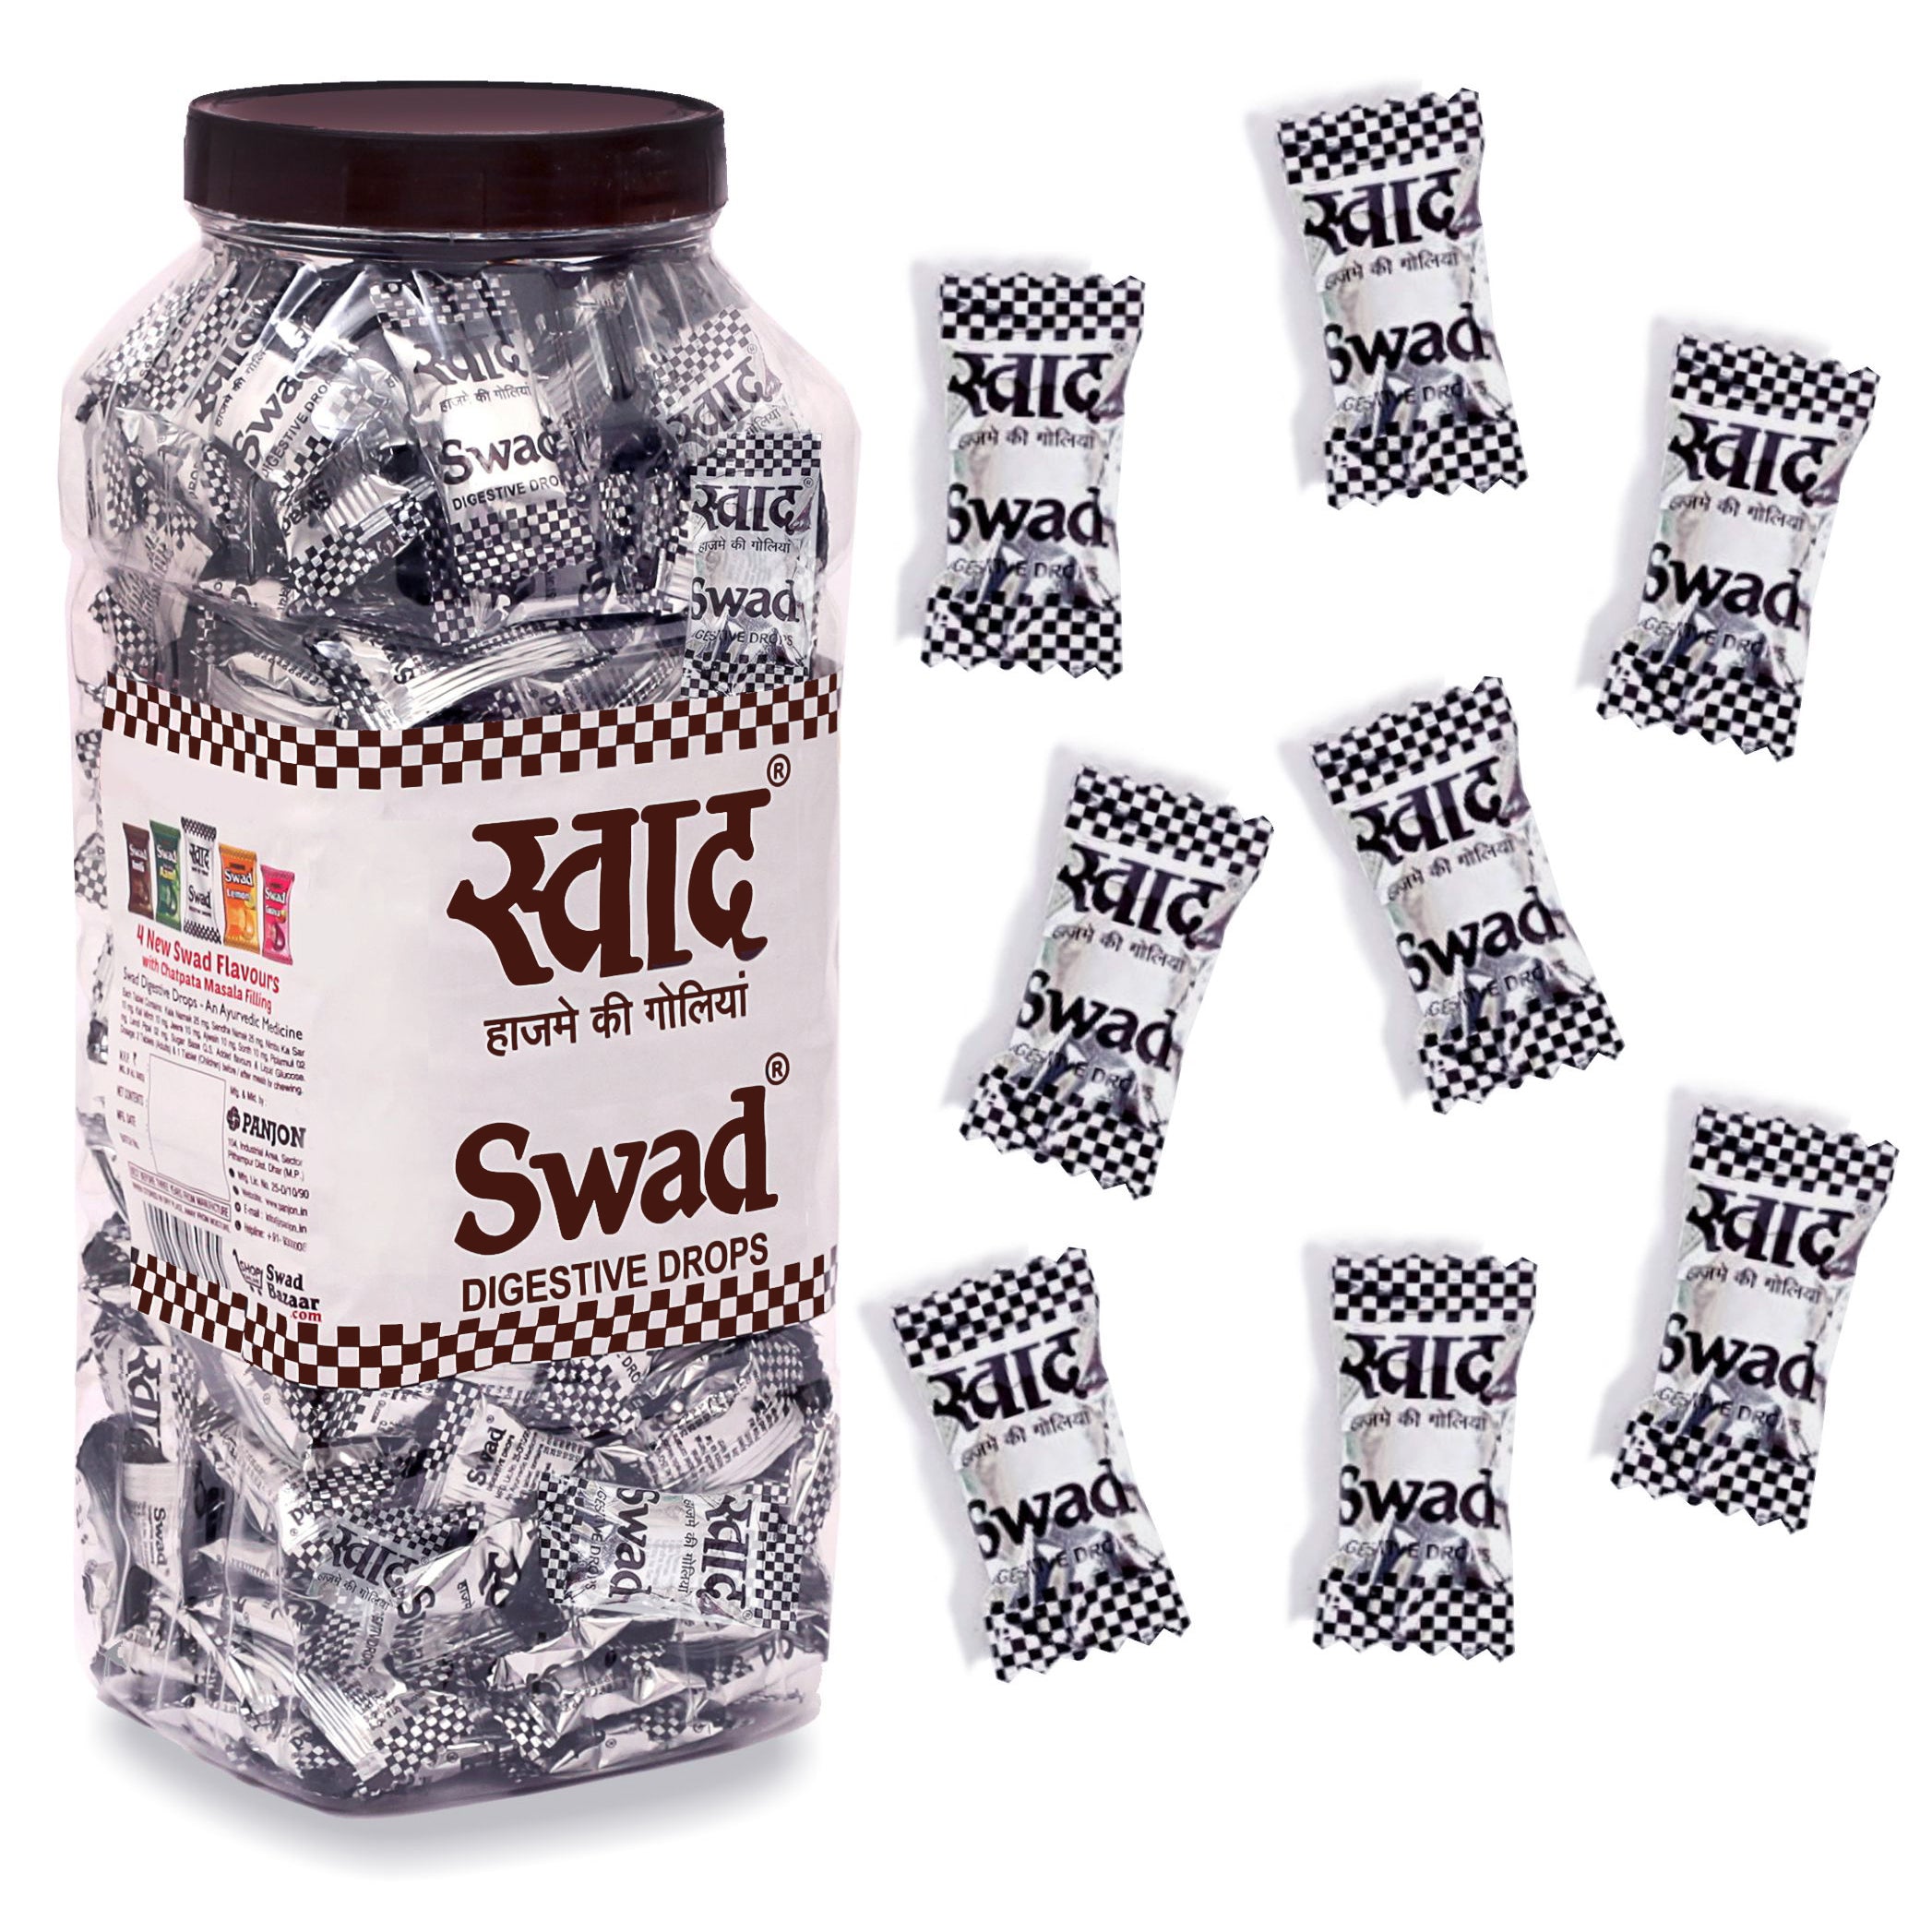 Swad Digestive Drops Candy Jar (150 Toffees)